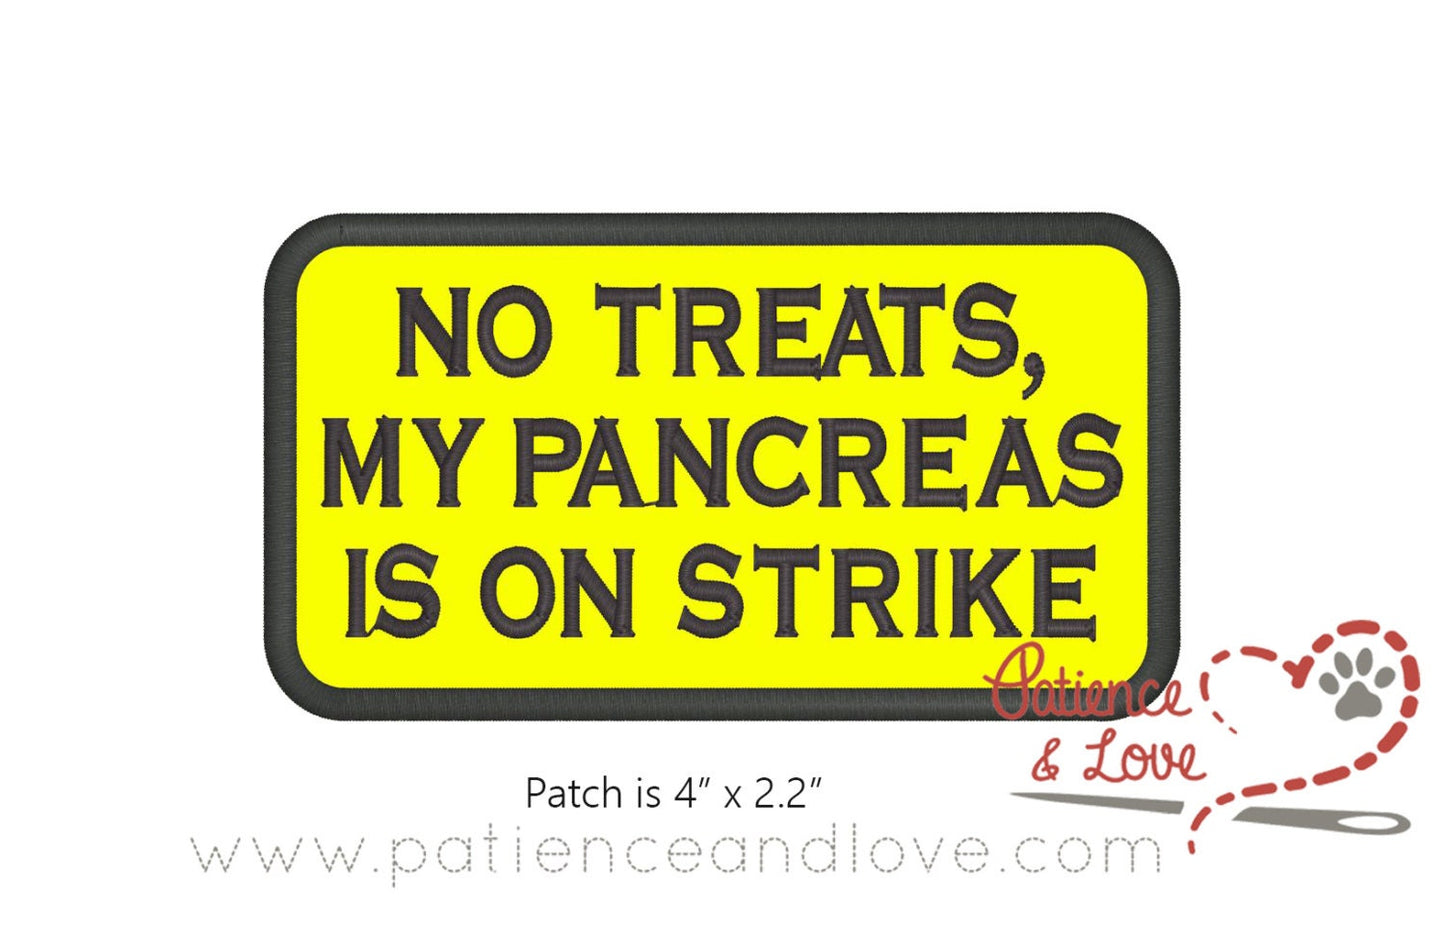 No Treats - My pancreas is on strike, 4 x 2.2 inch rectangular patch